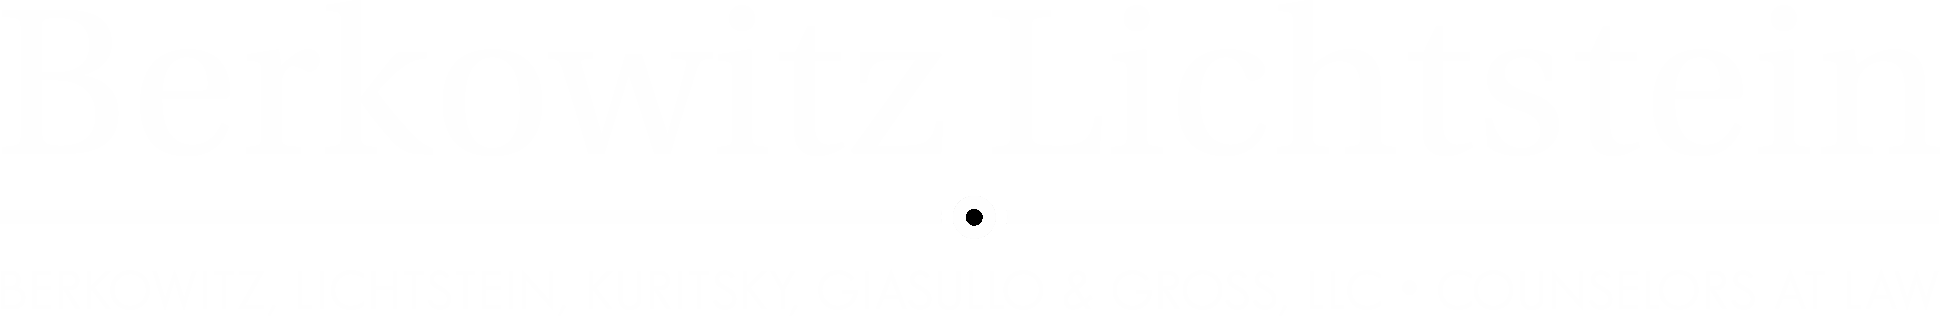 Berkowitz, Lichtstein, Kuritsky, Giasullo & Gross LLC